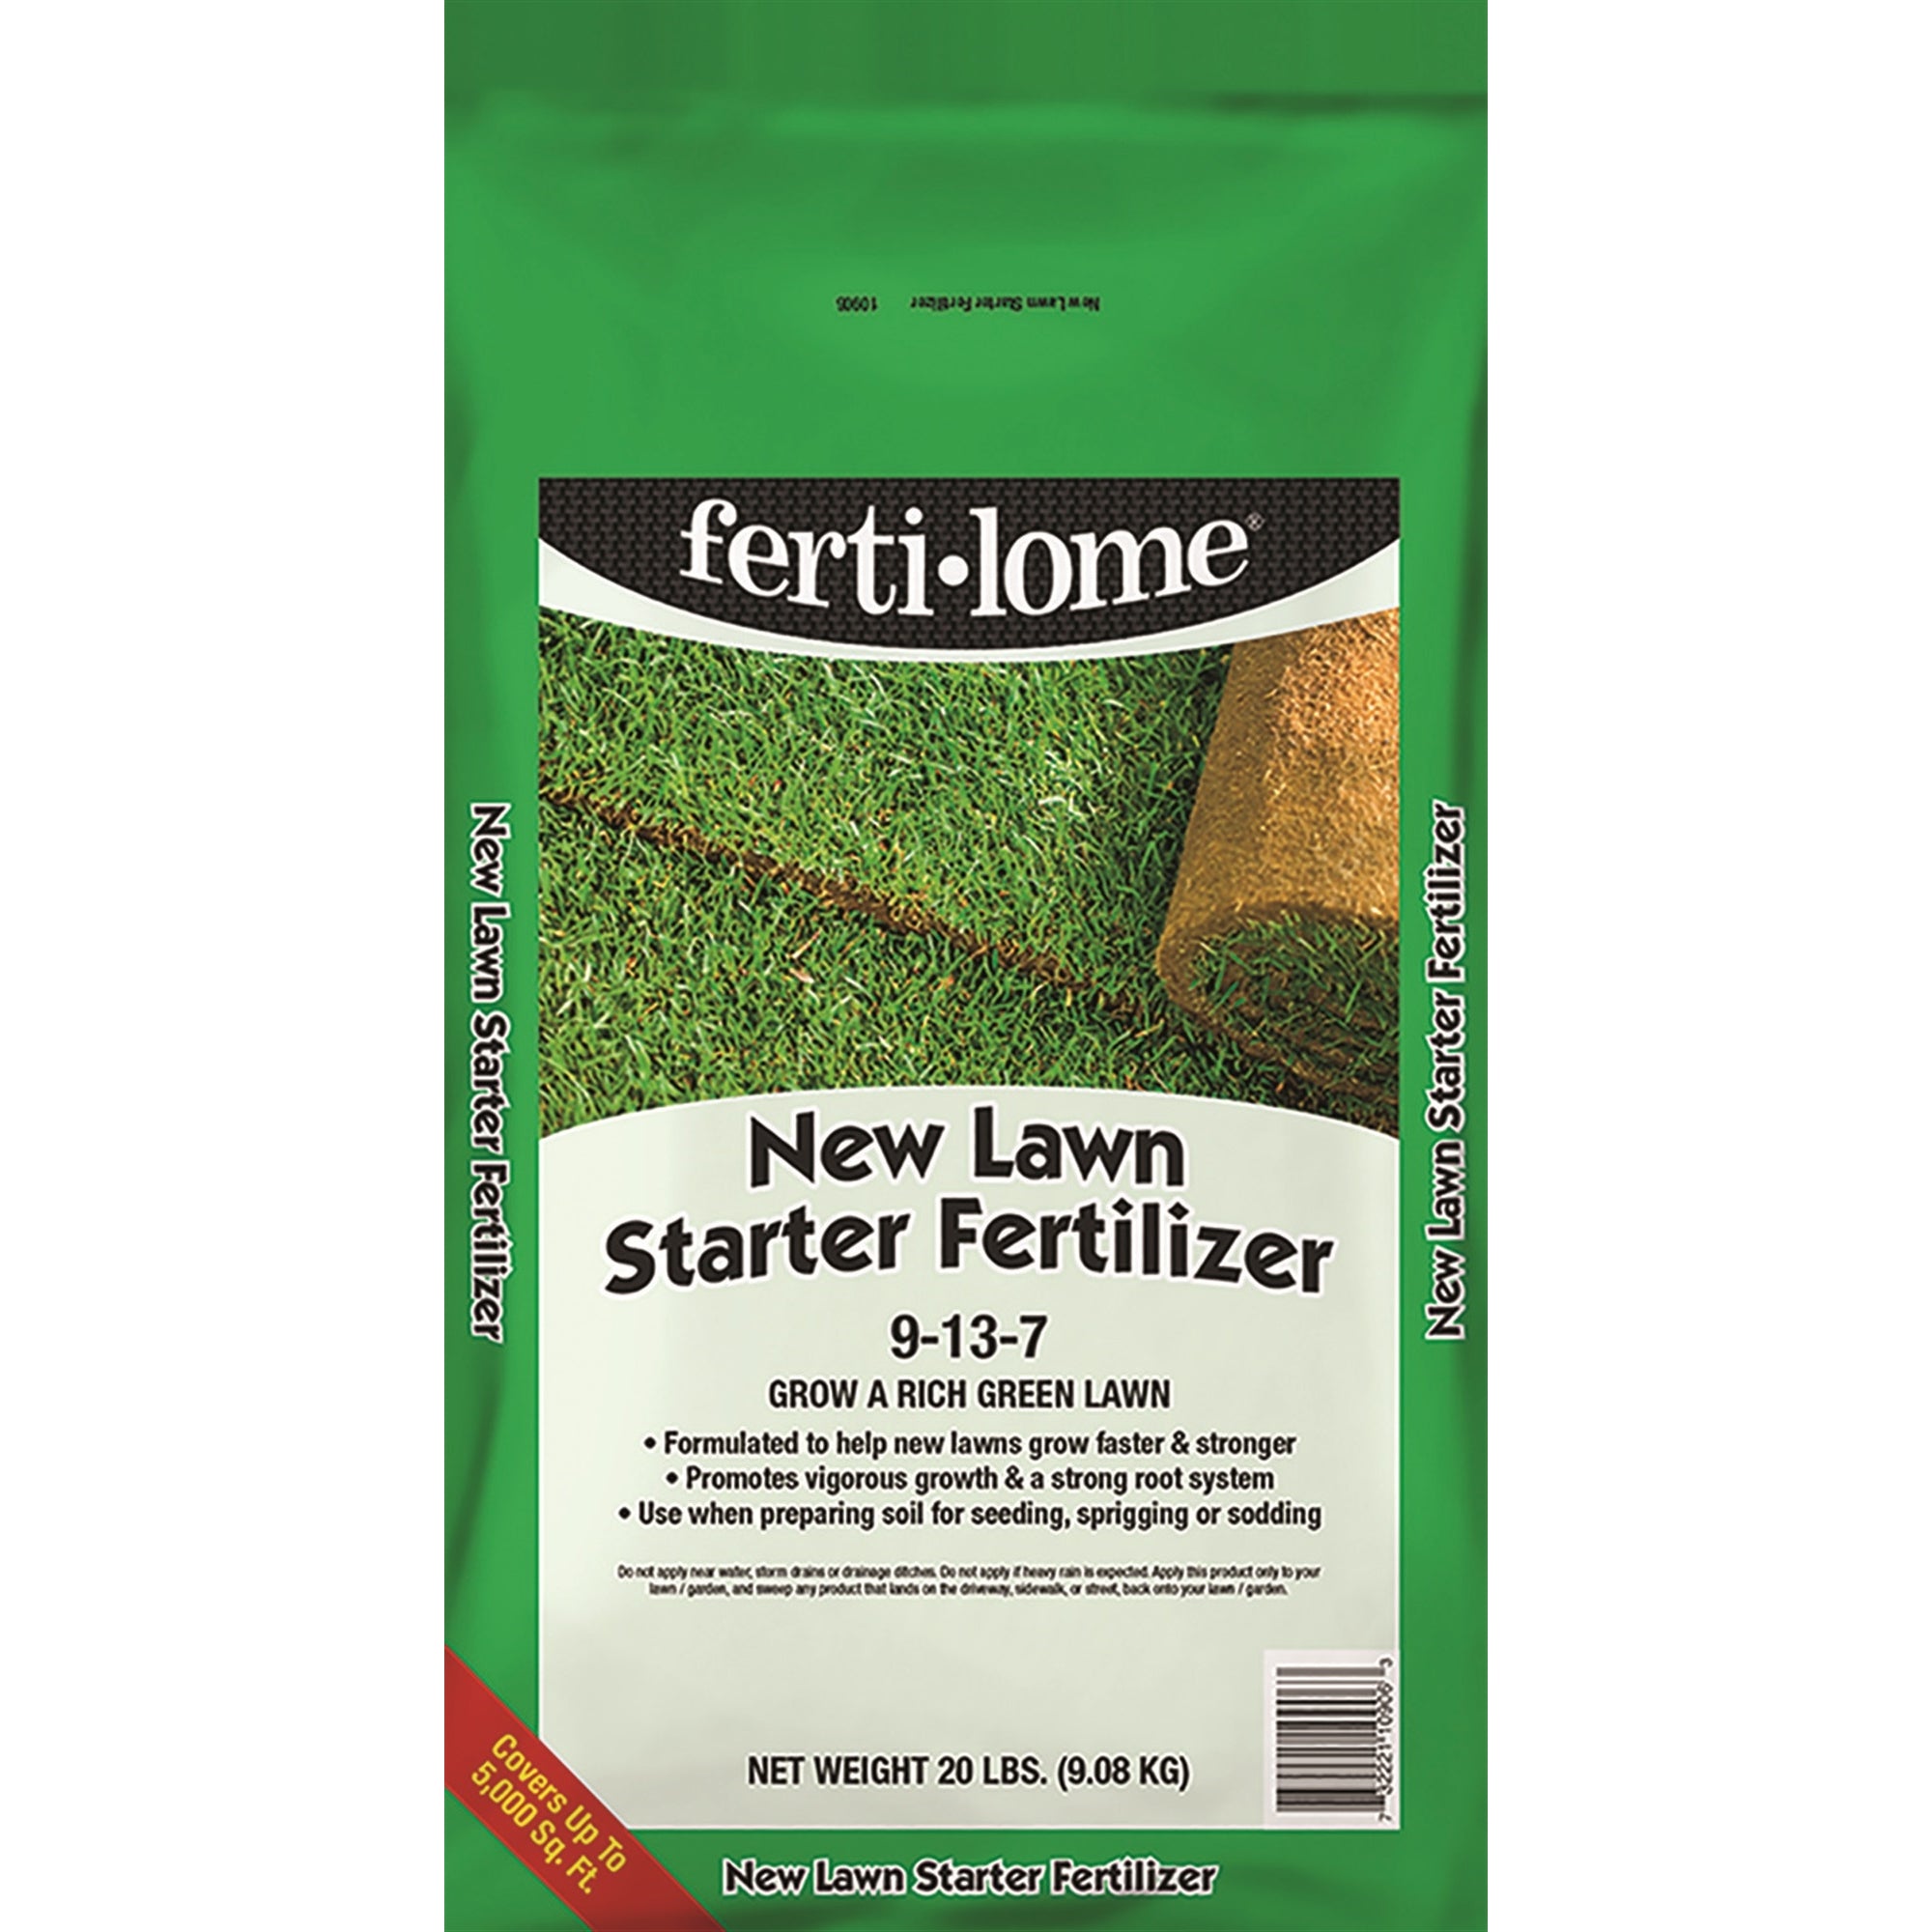 VPG Fertilome New Lawn Starter Fertilizer for a Rich Green Lawn, 9-13-7